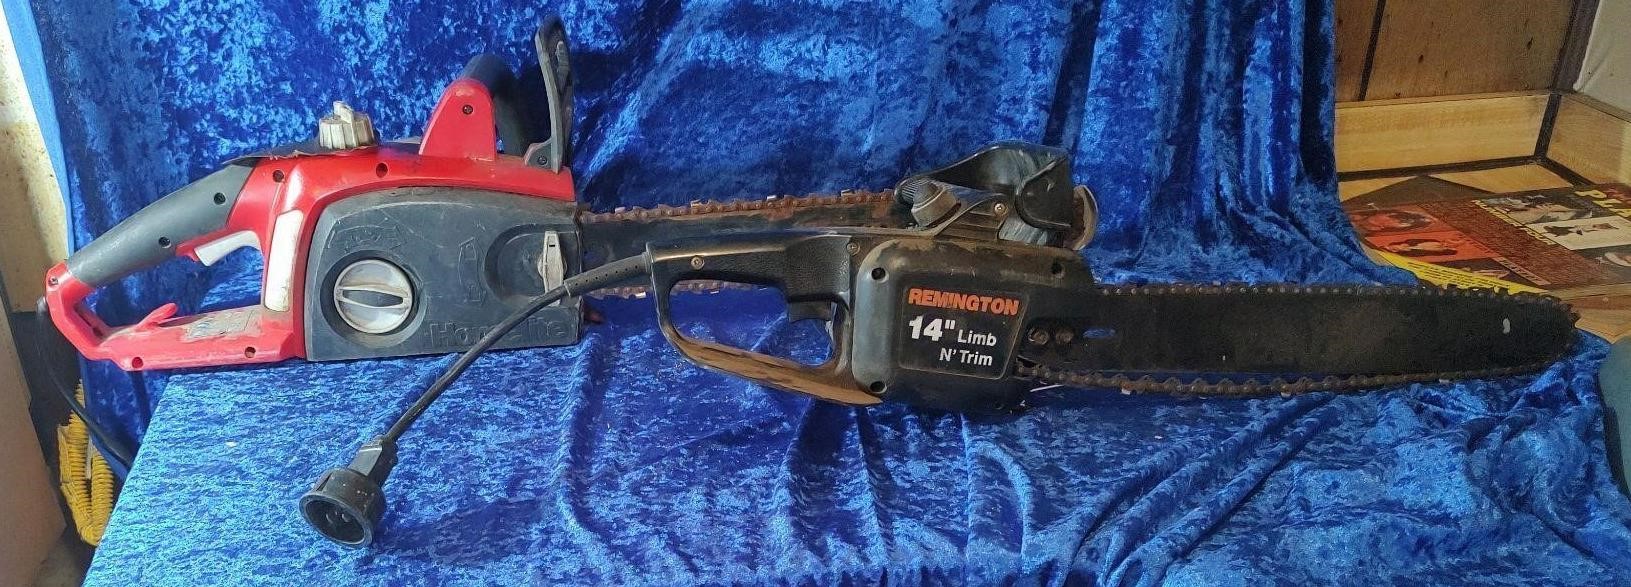 Corded chainsaws Homelite & Remington